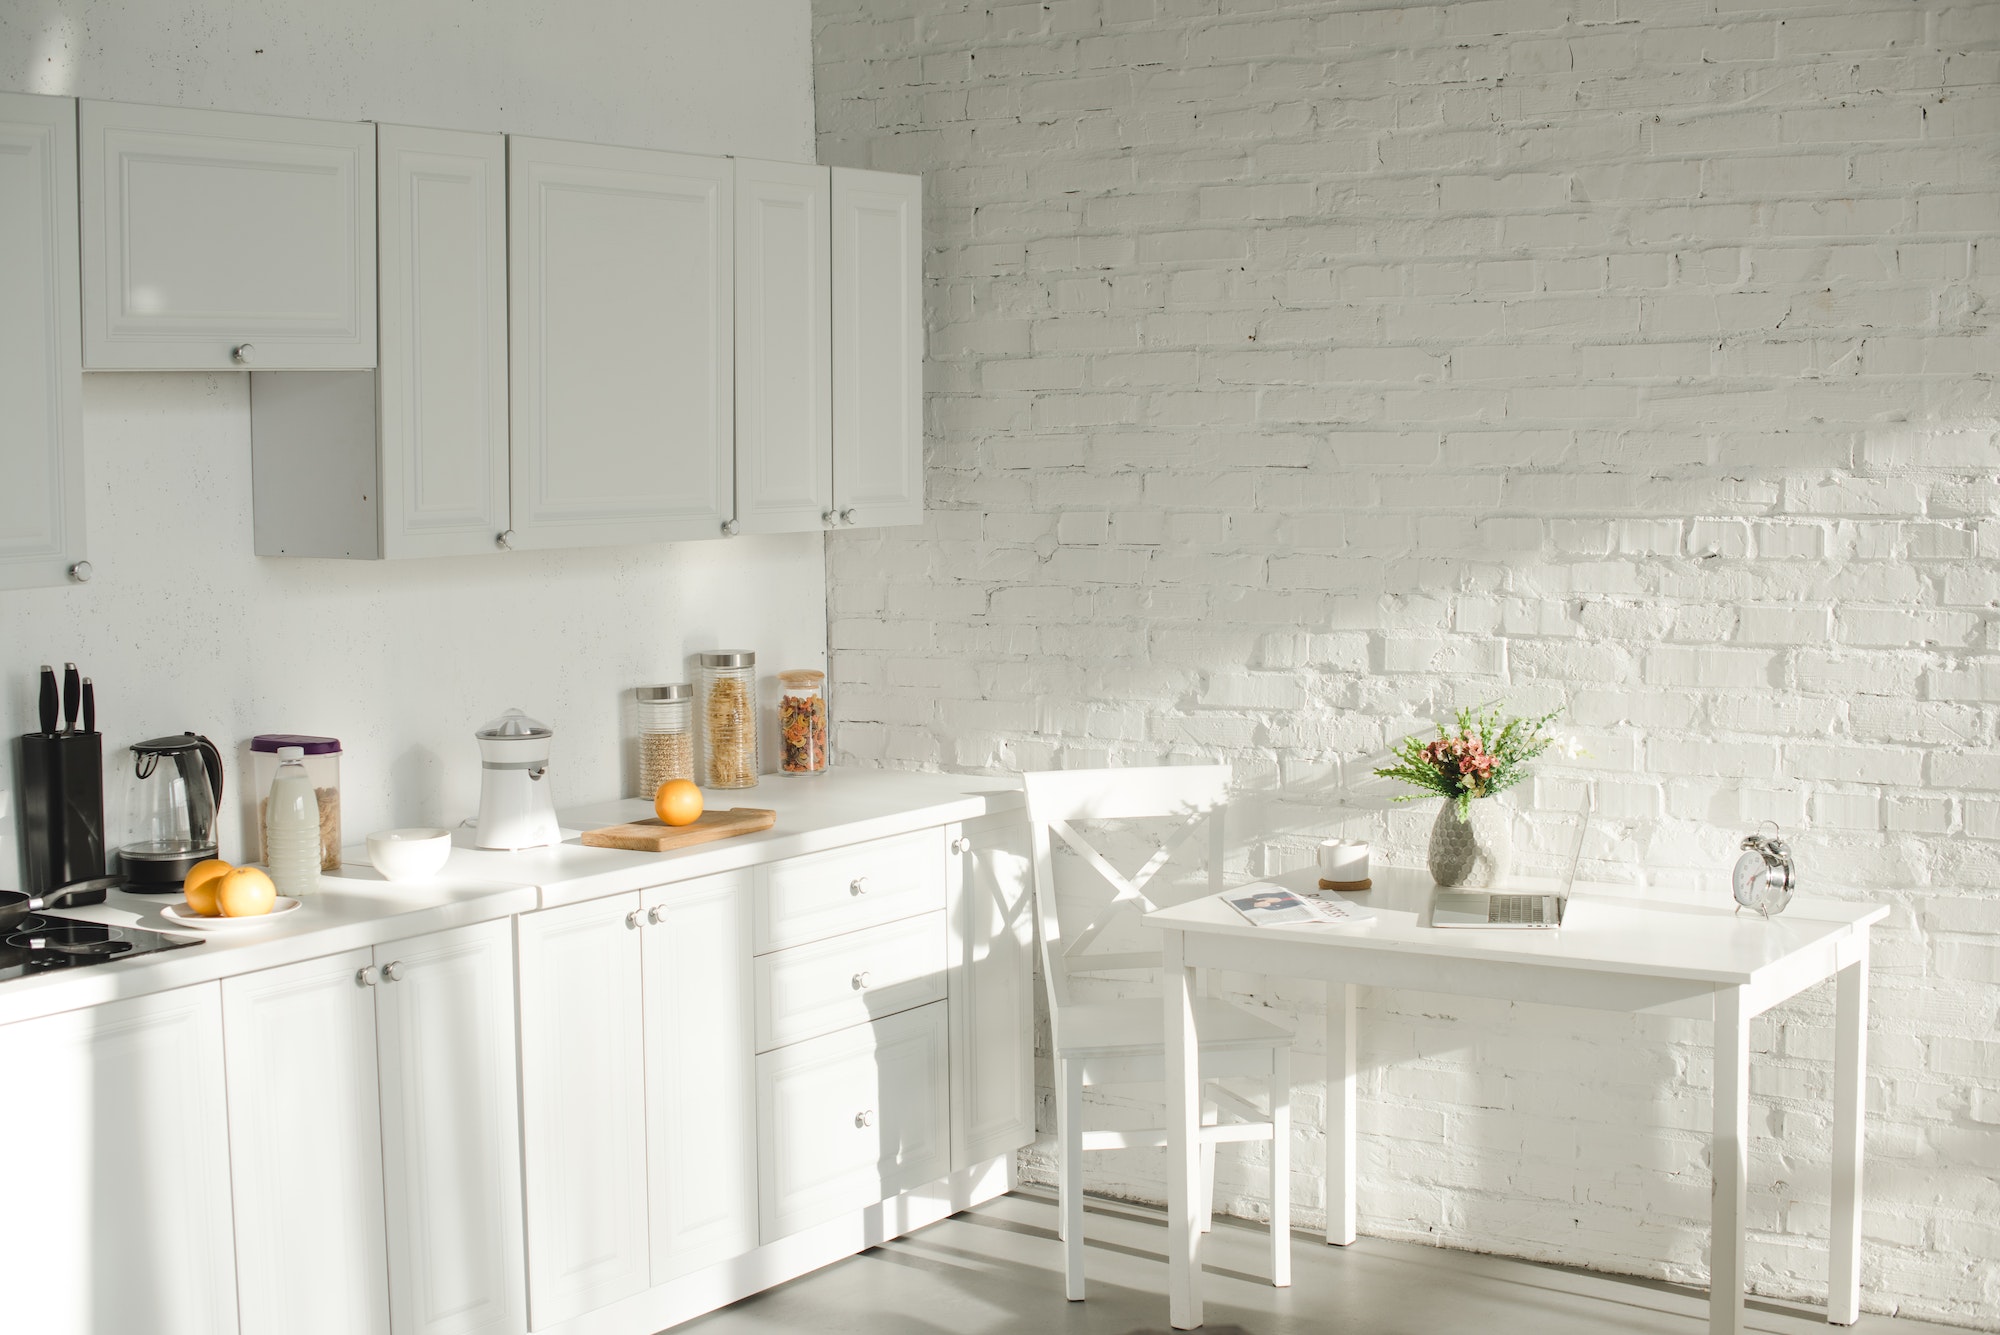 sunlight in white modern kitchen with cooking utensils